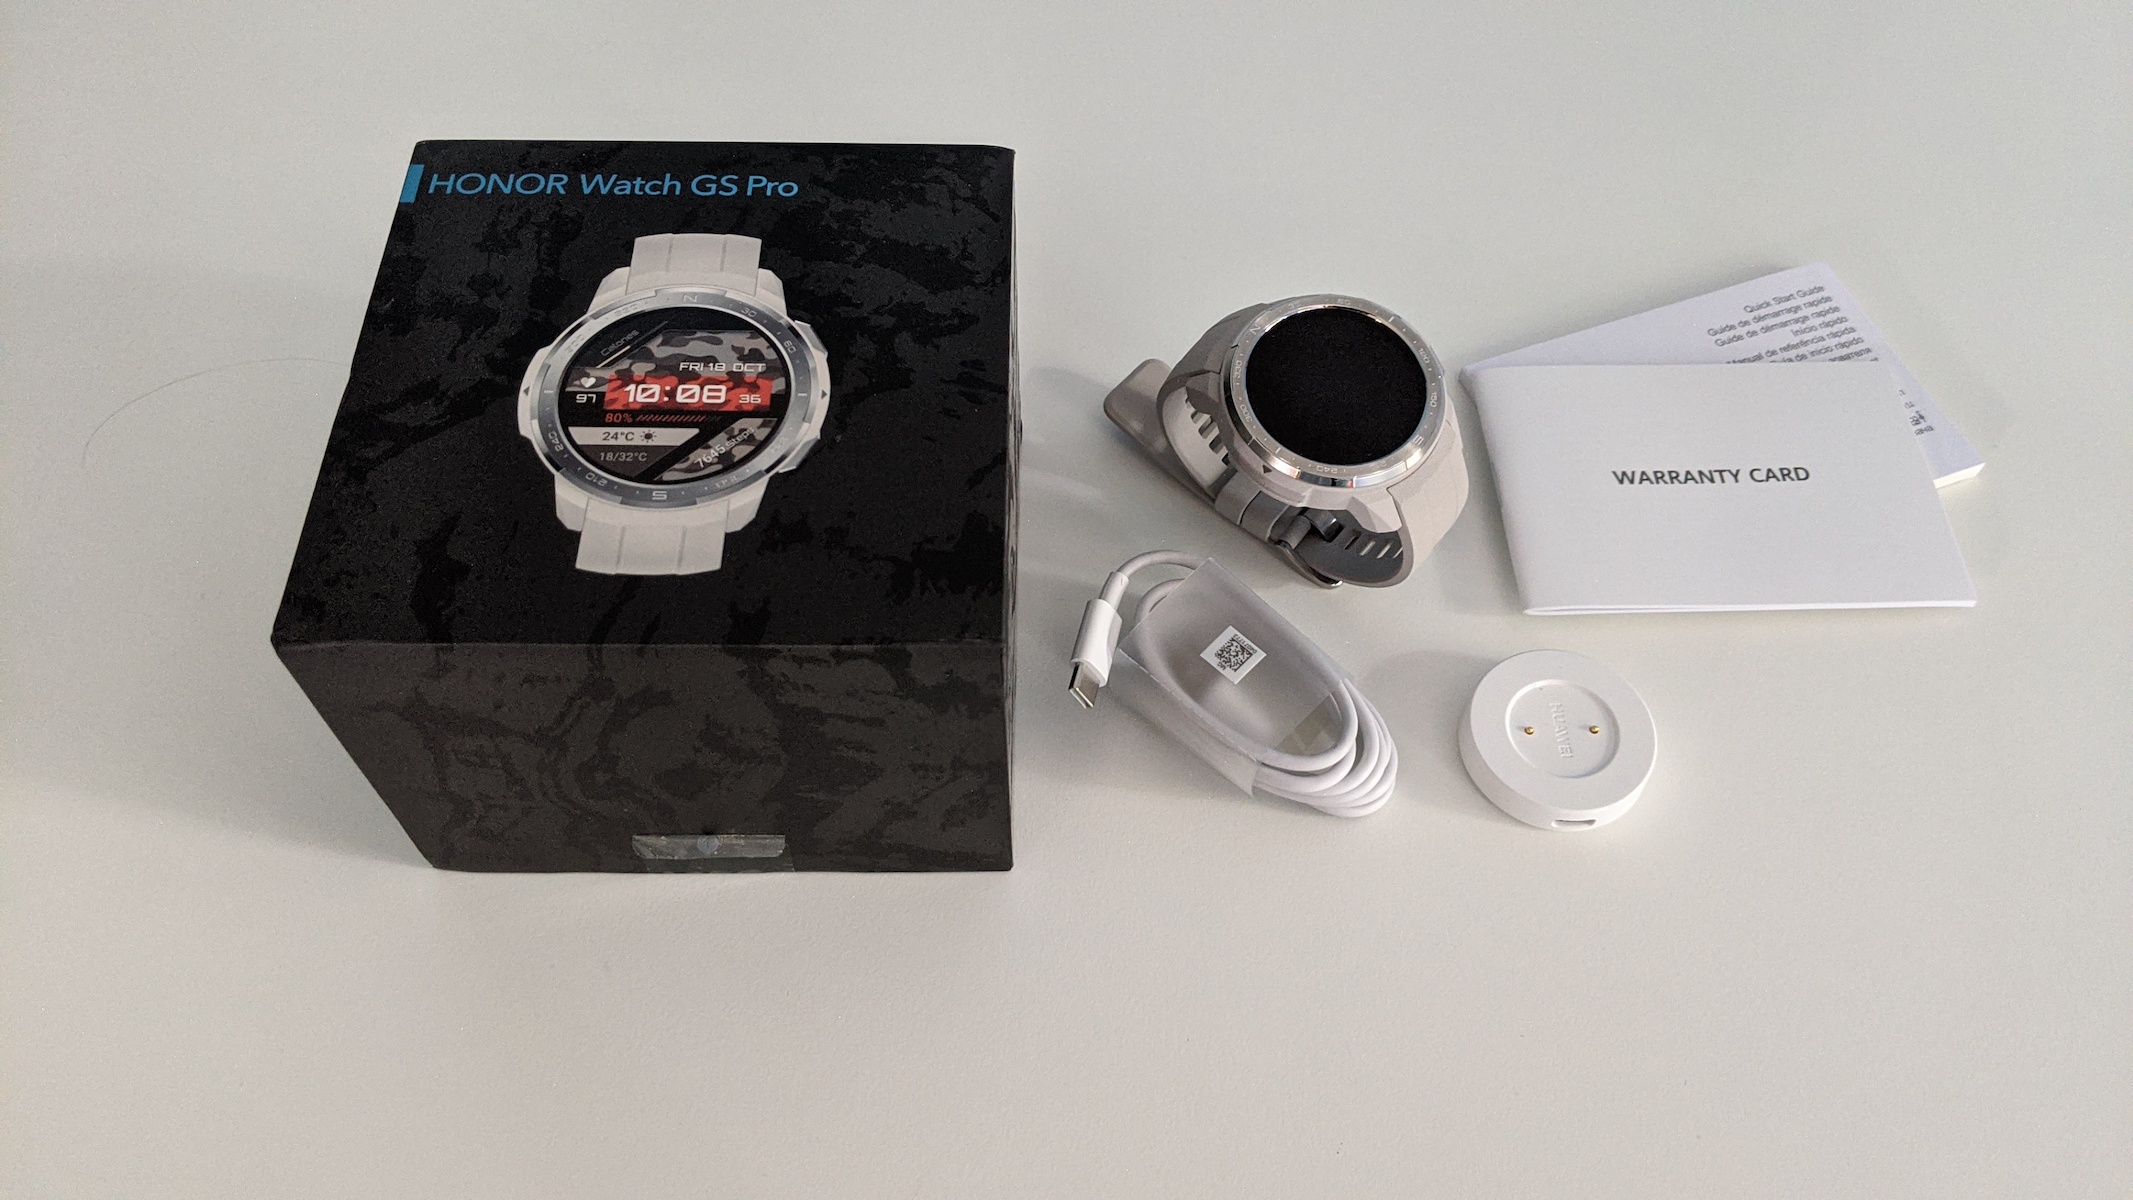 Honor Watch GS Pro Smartwatch Review - NotebookCheck.net Reviews